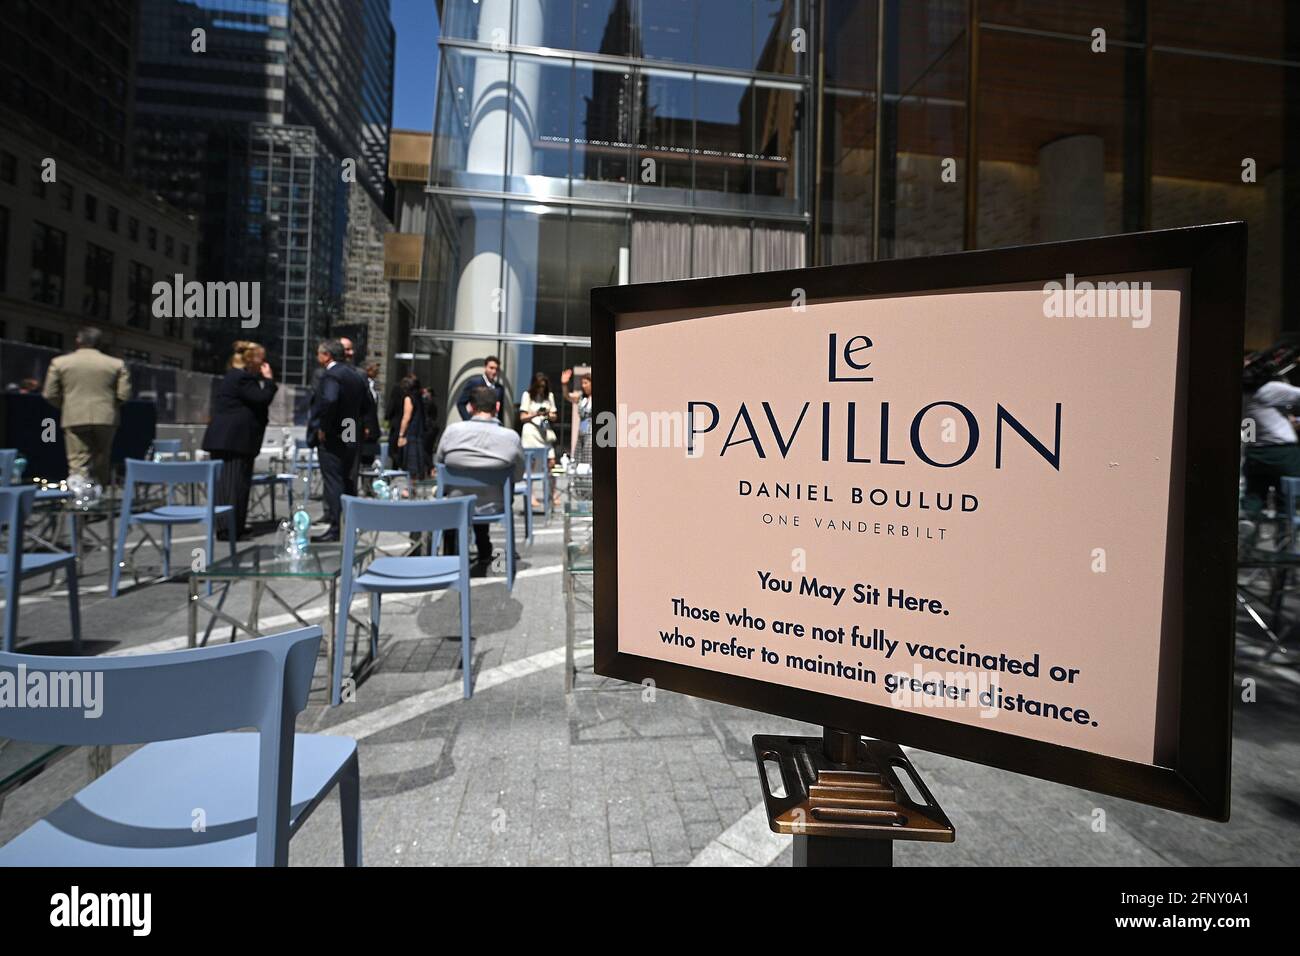 Daniel Boulud Restaurant Le Pavillon Opening In New York City